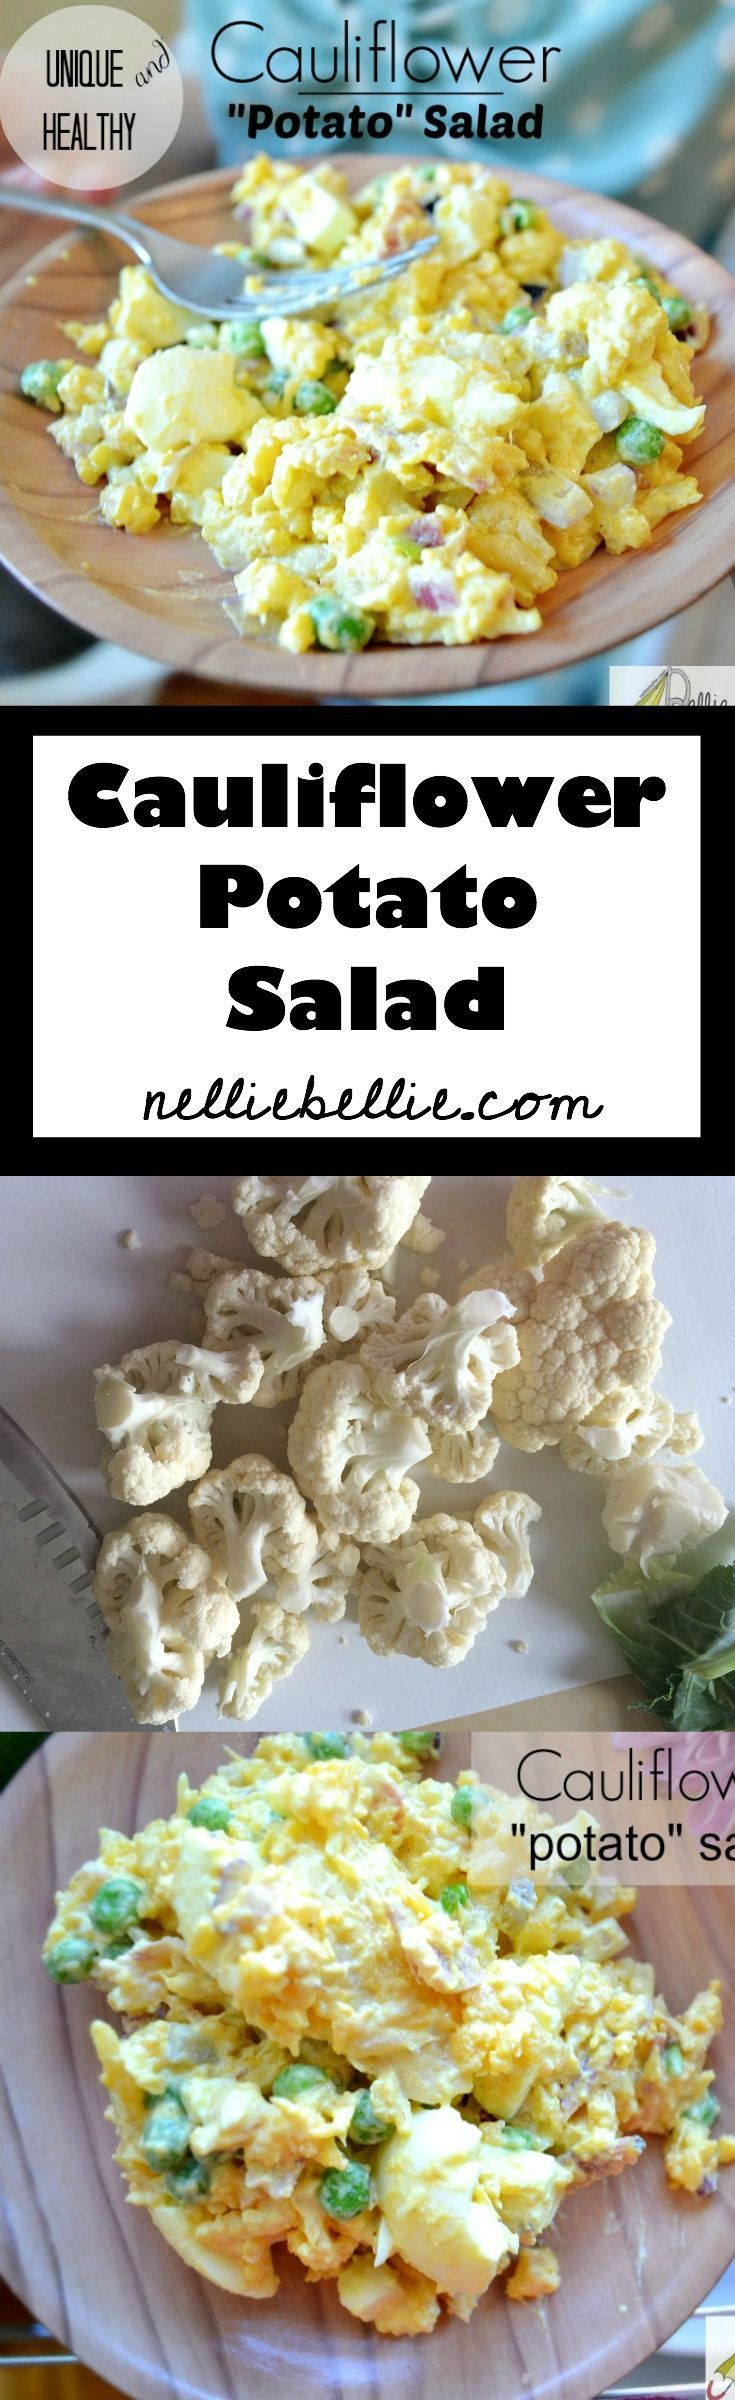 Traditional potato salad gets a delicious makeover!